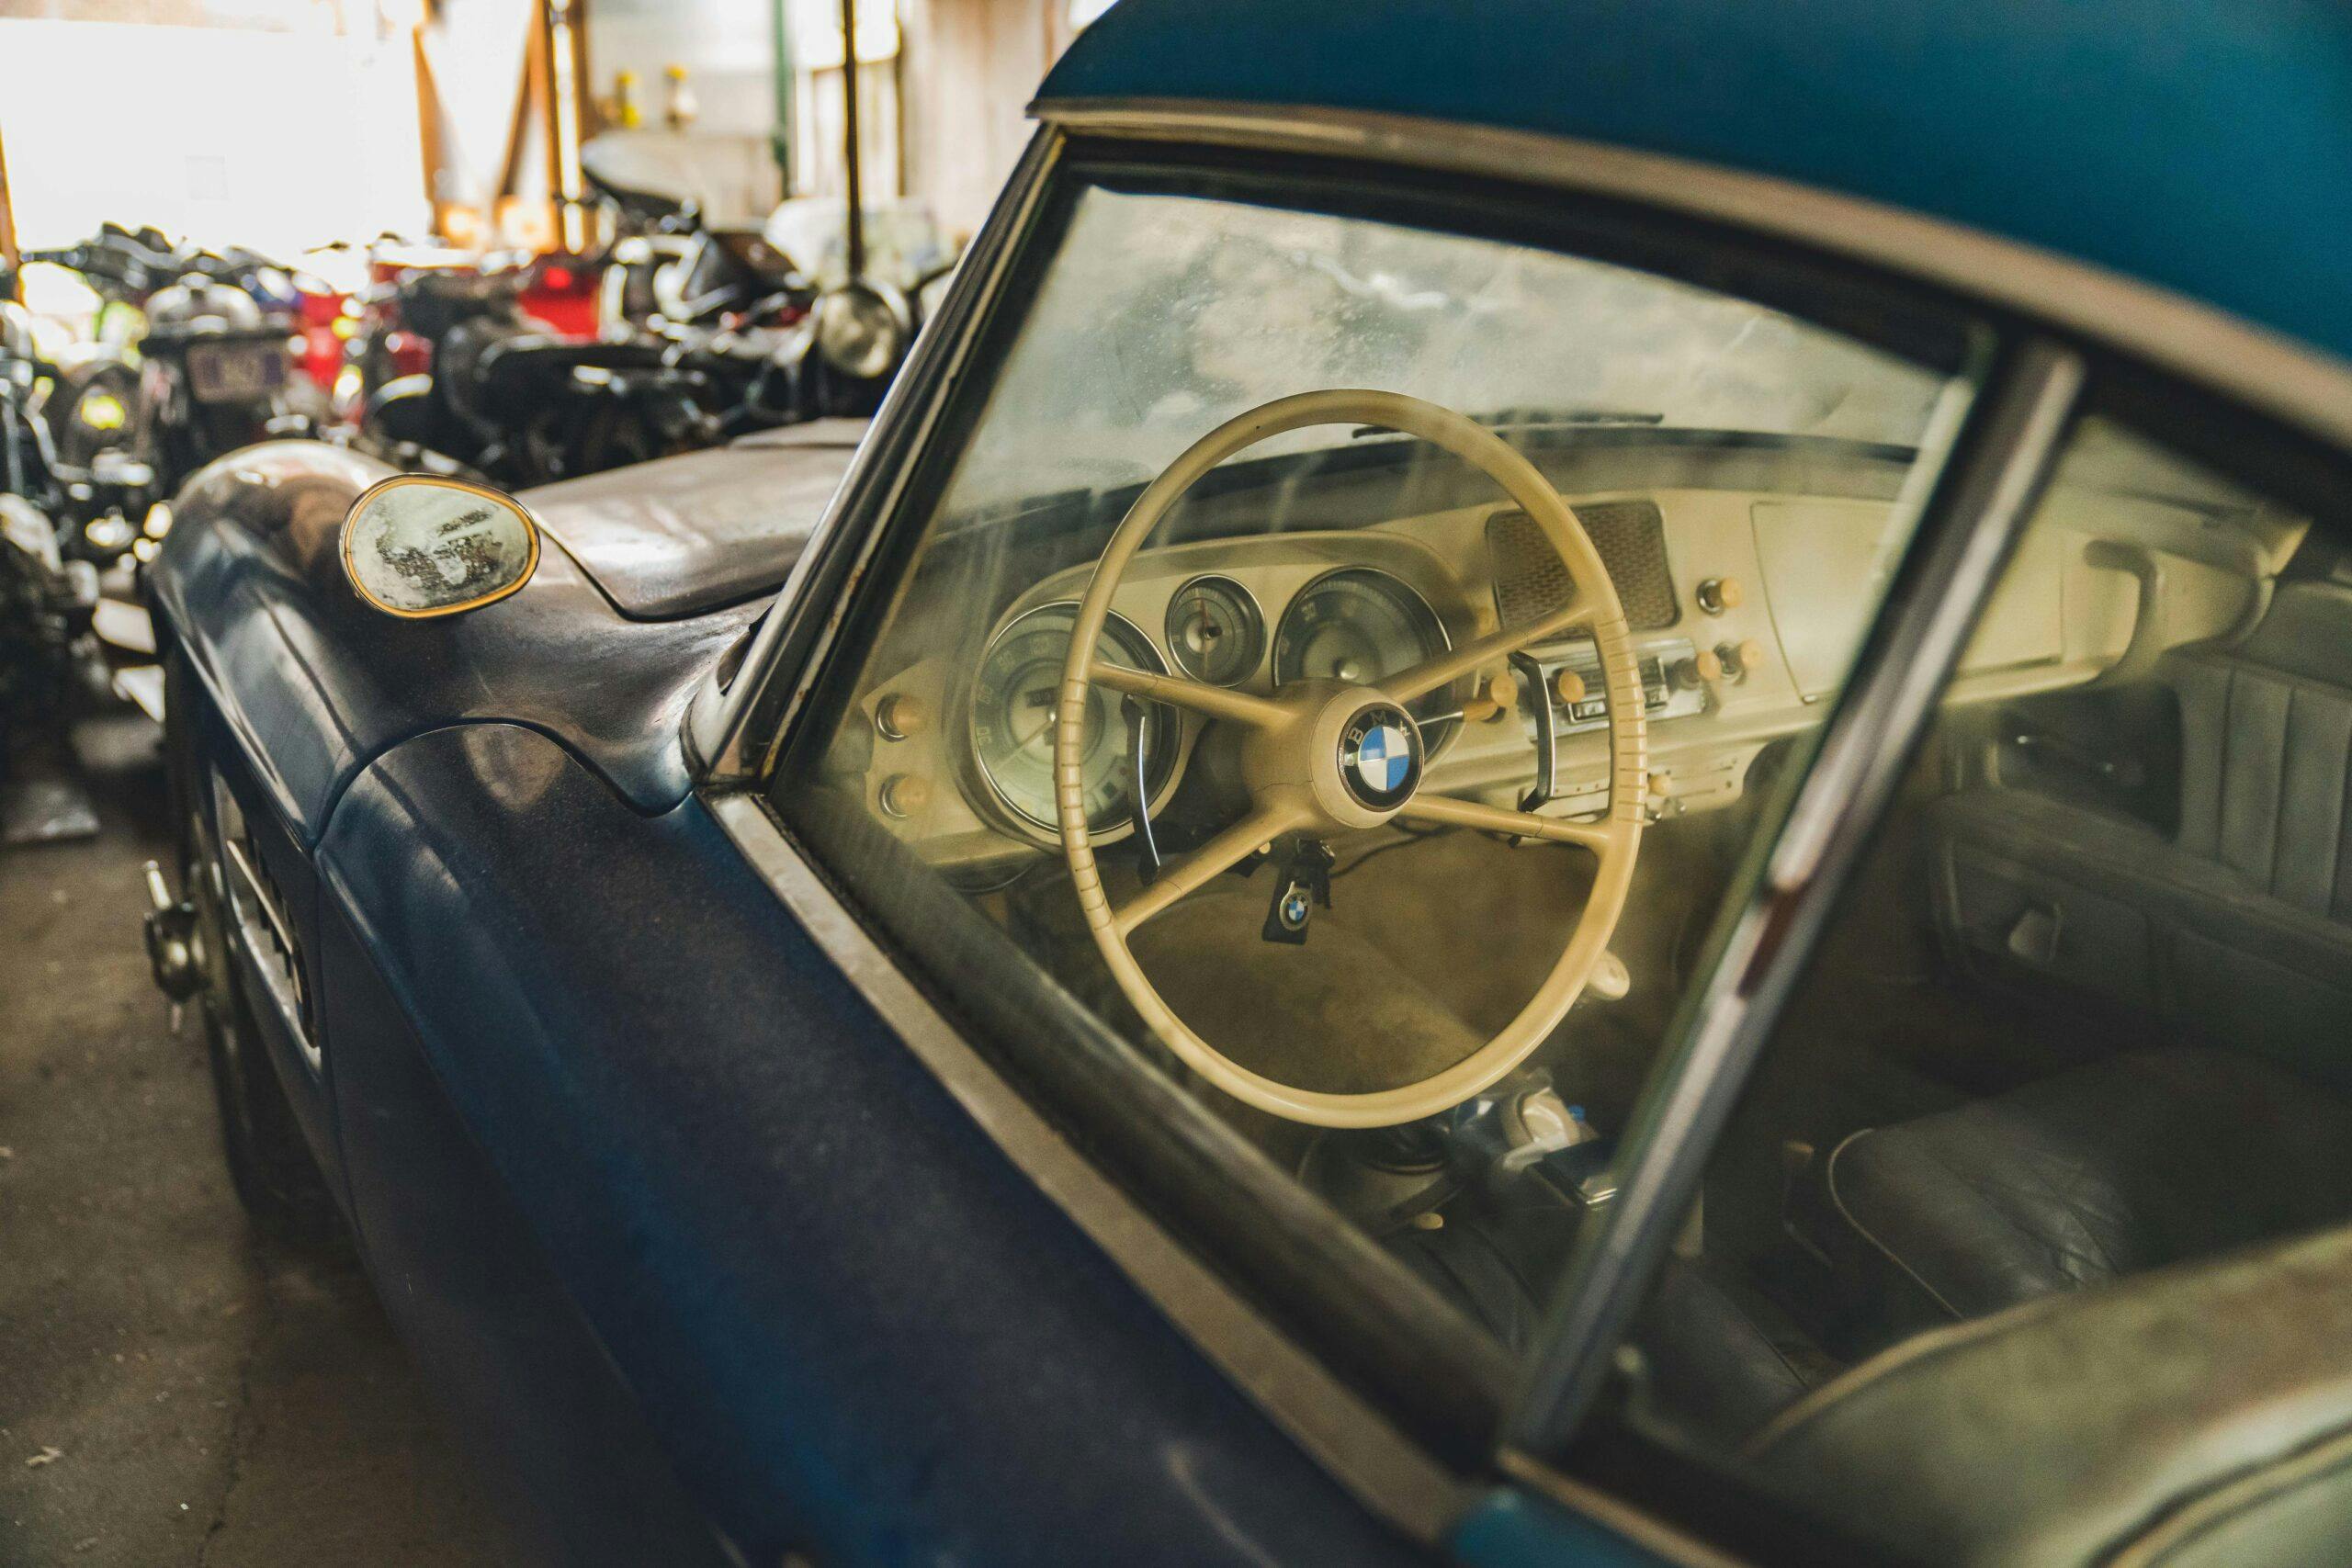 BMW 507 steering wheel through glass